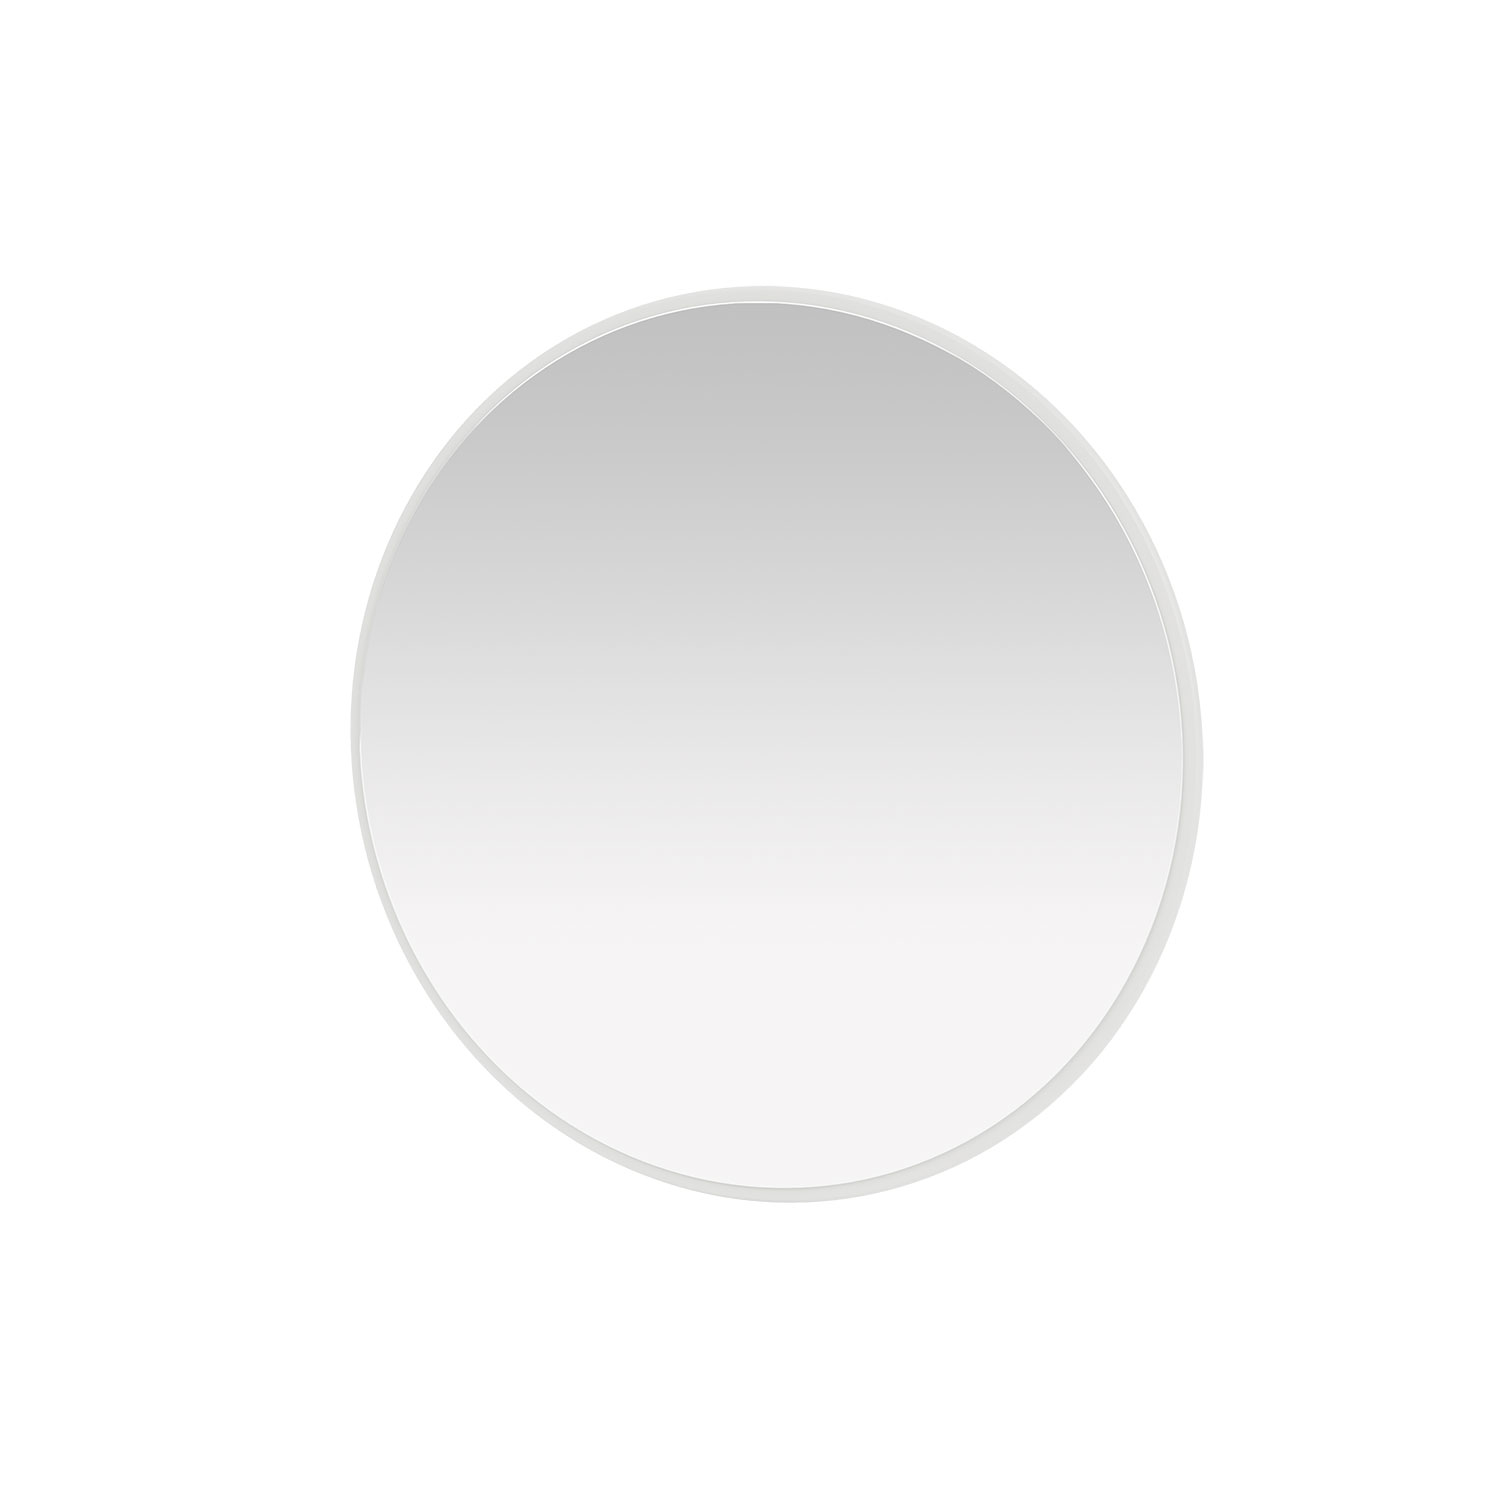 AROUND mirror, White